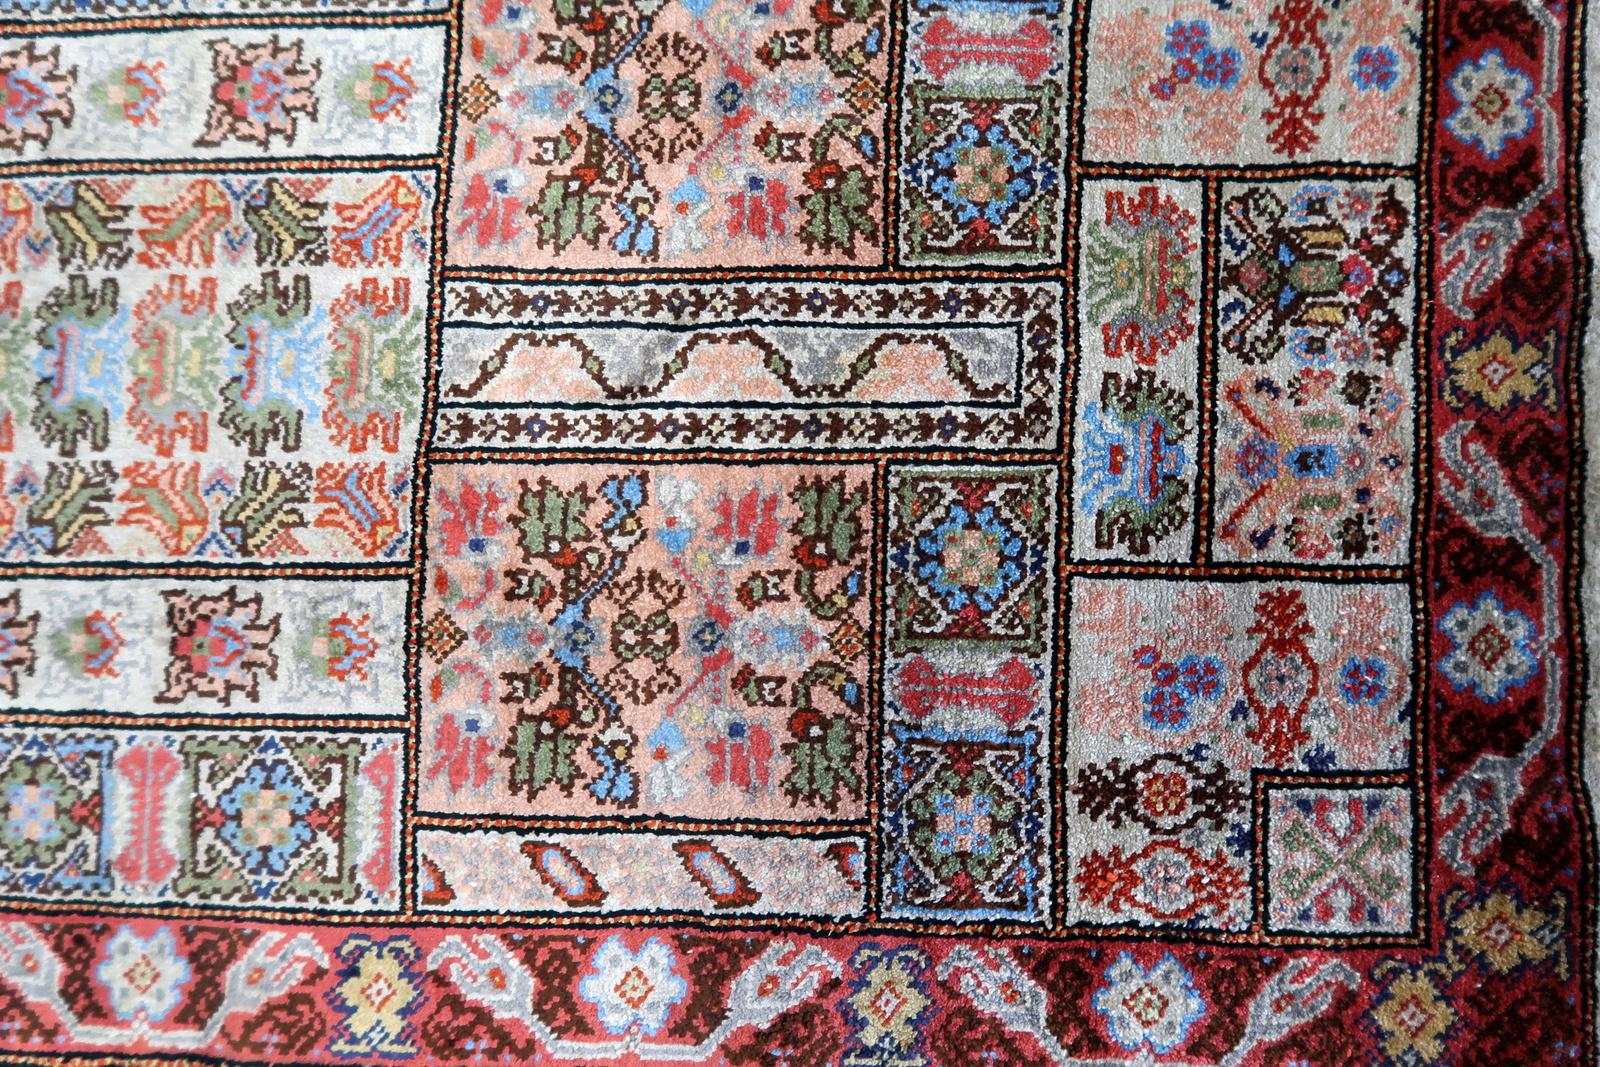 Late 20th Century Handmade Vintage Tunisian Silk Rug 1.6' x 3.7', 1970s - 1C1113 For Sale